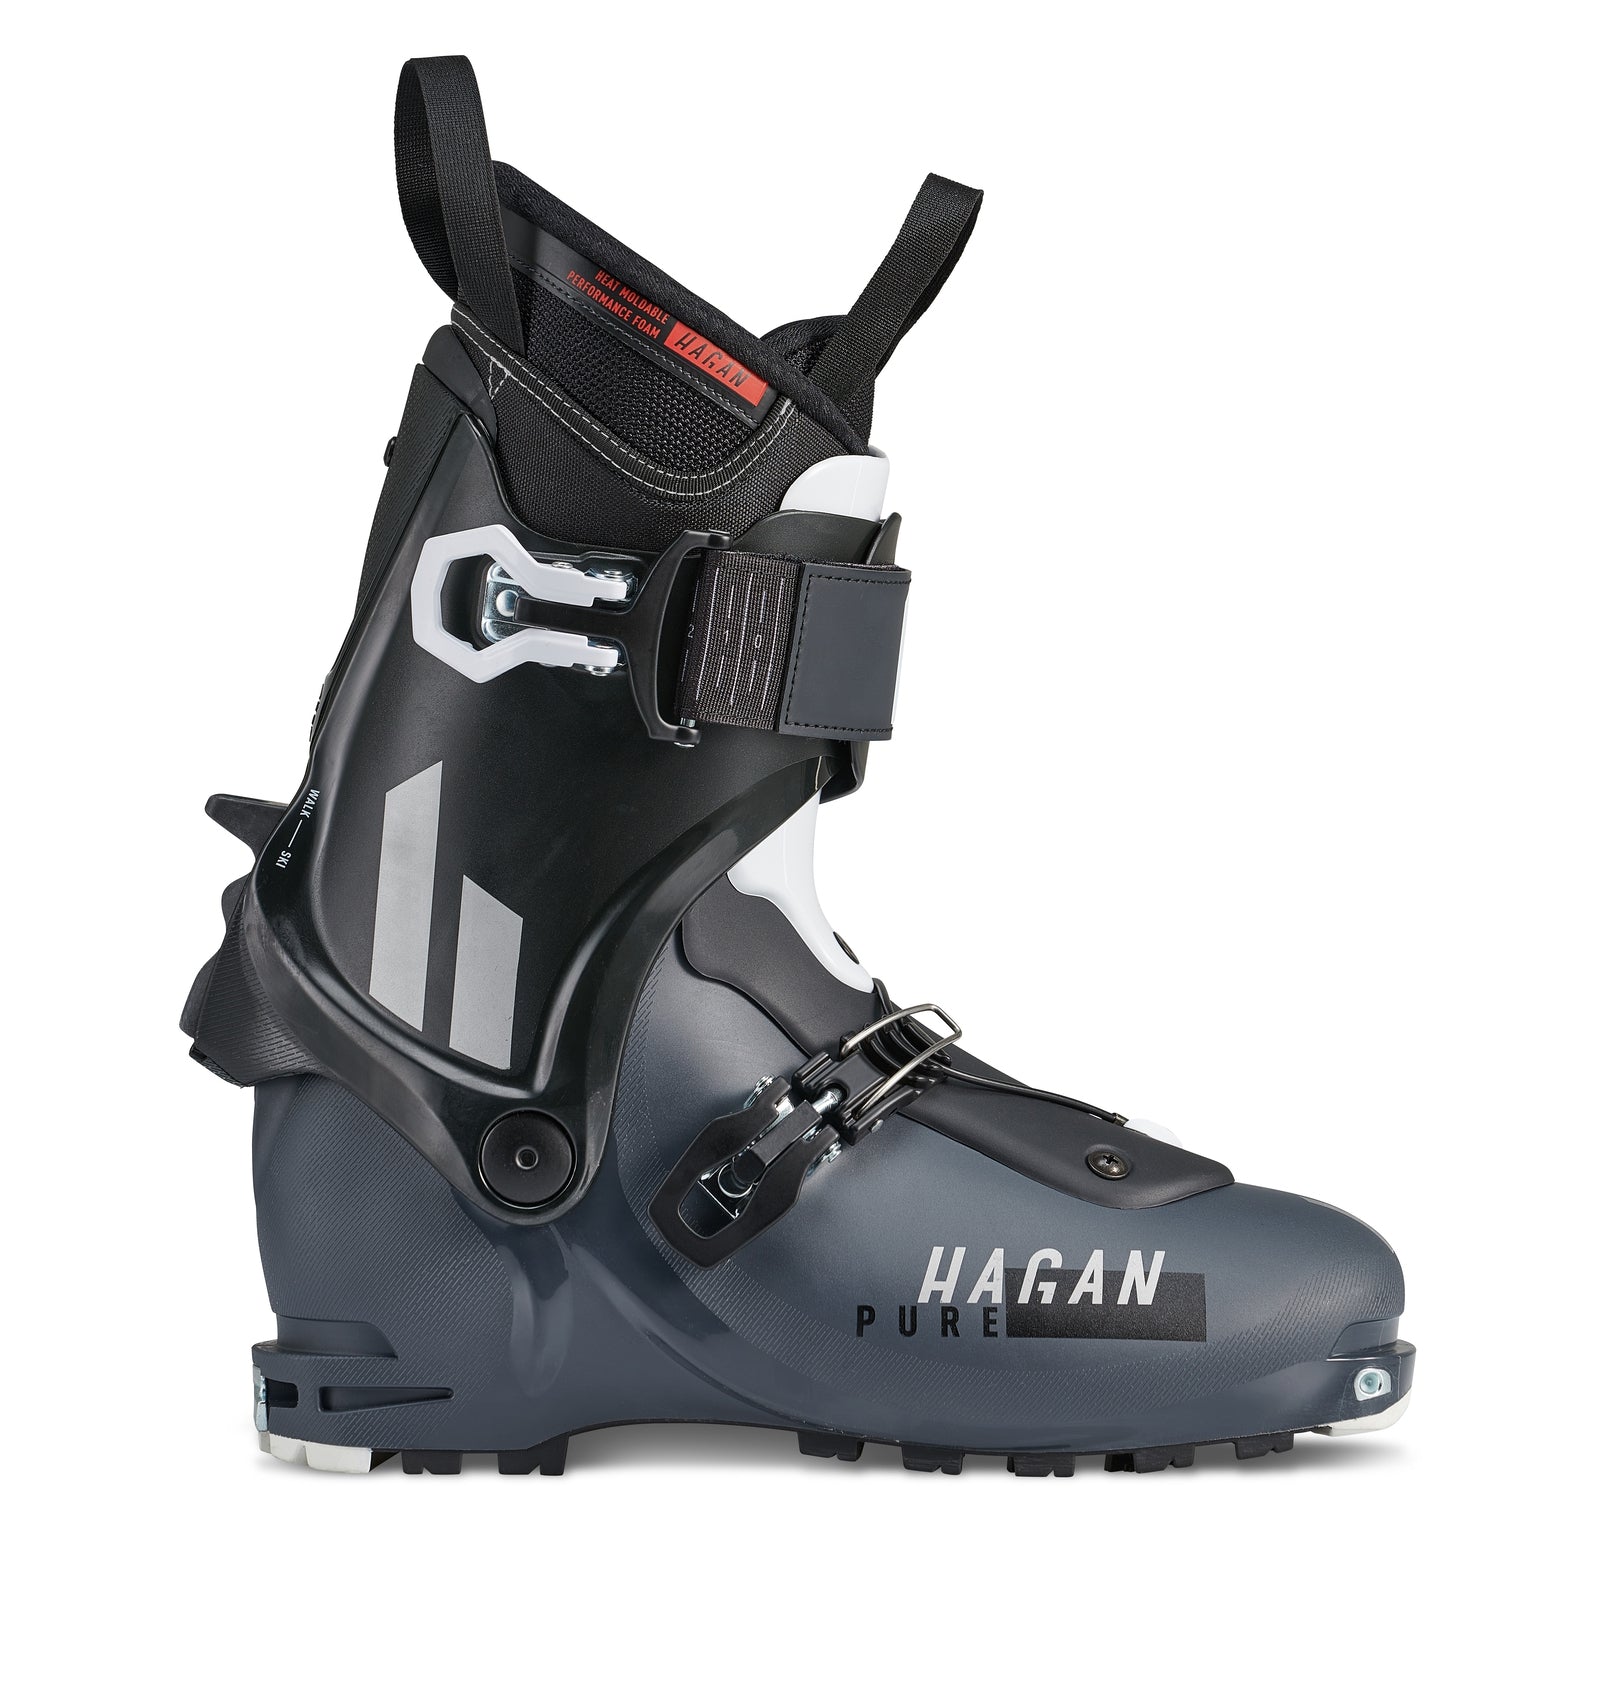 Hagan Pure Alpine Ski Touring Boots - Hagan Ski Mountaineering Alpine Ski Touring Backcountry Gear